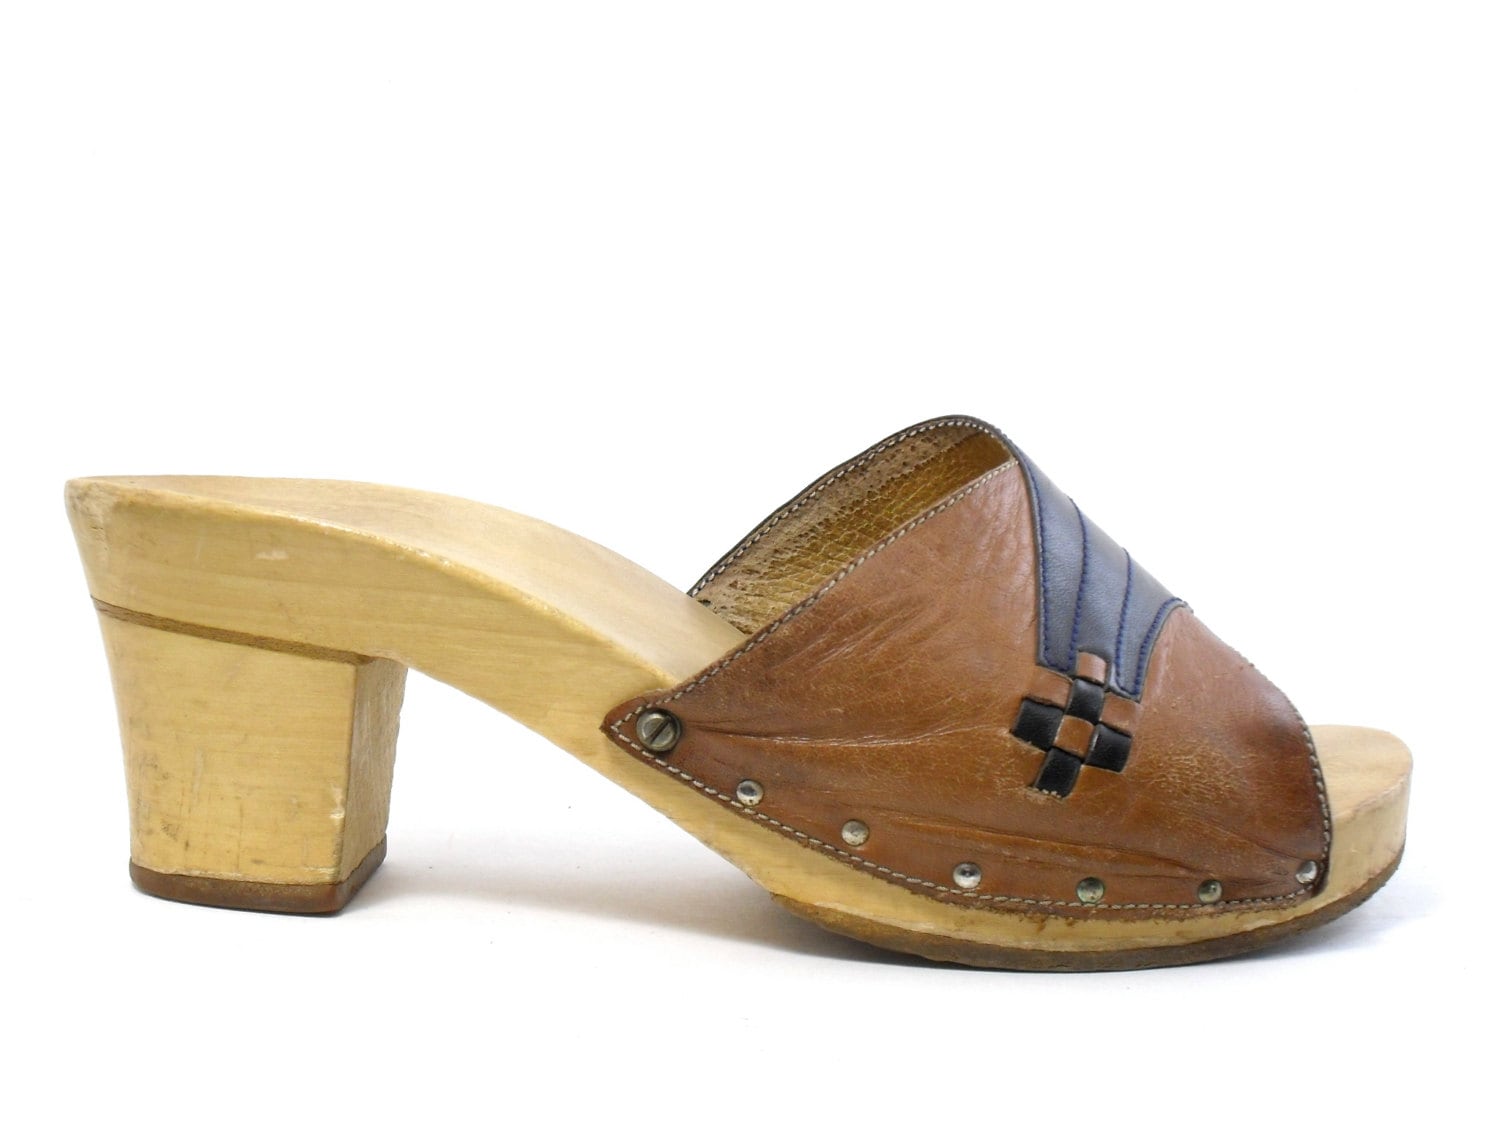 wooden sandals 7.5 38 / 70s sandals / 1970s by FindsAllKinds